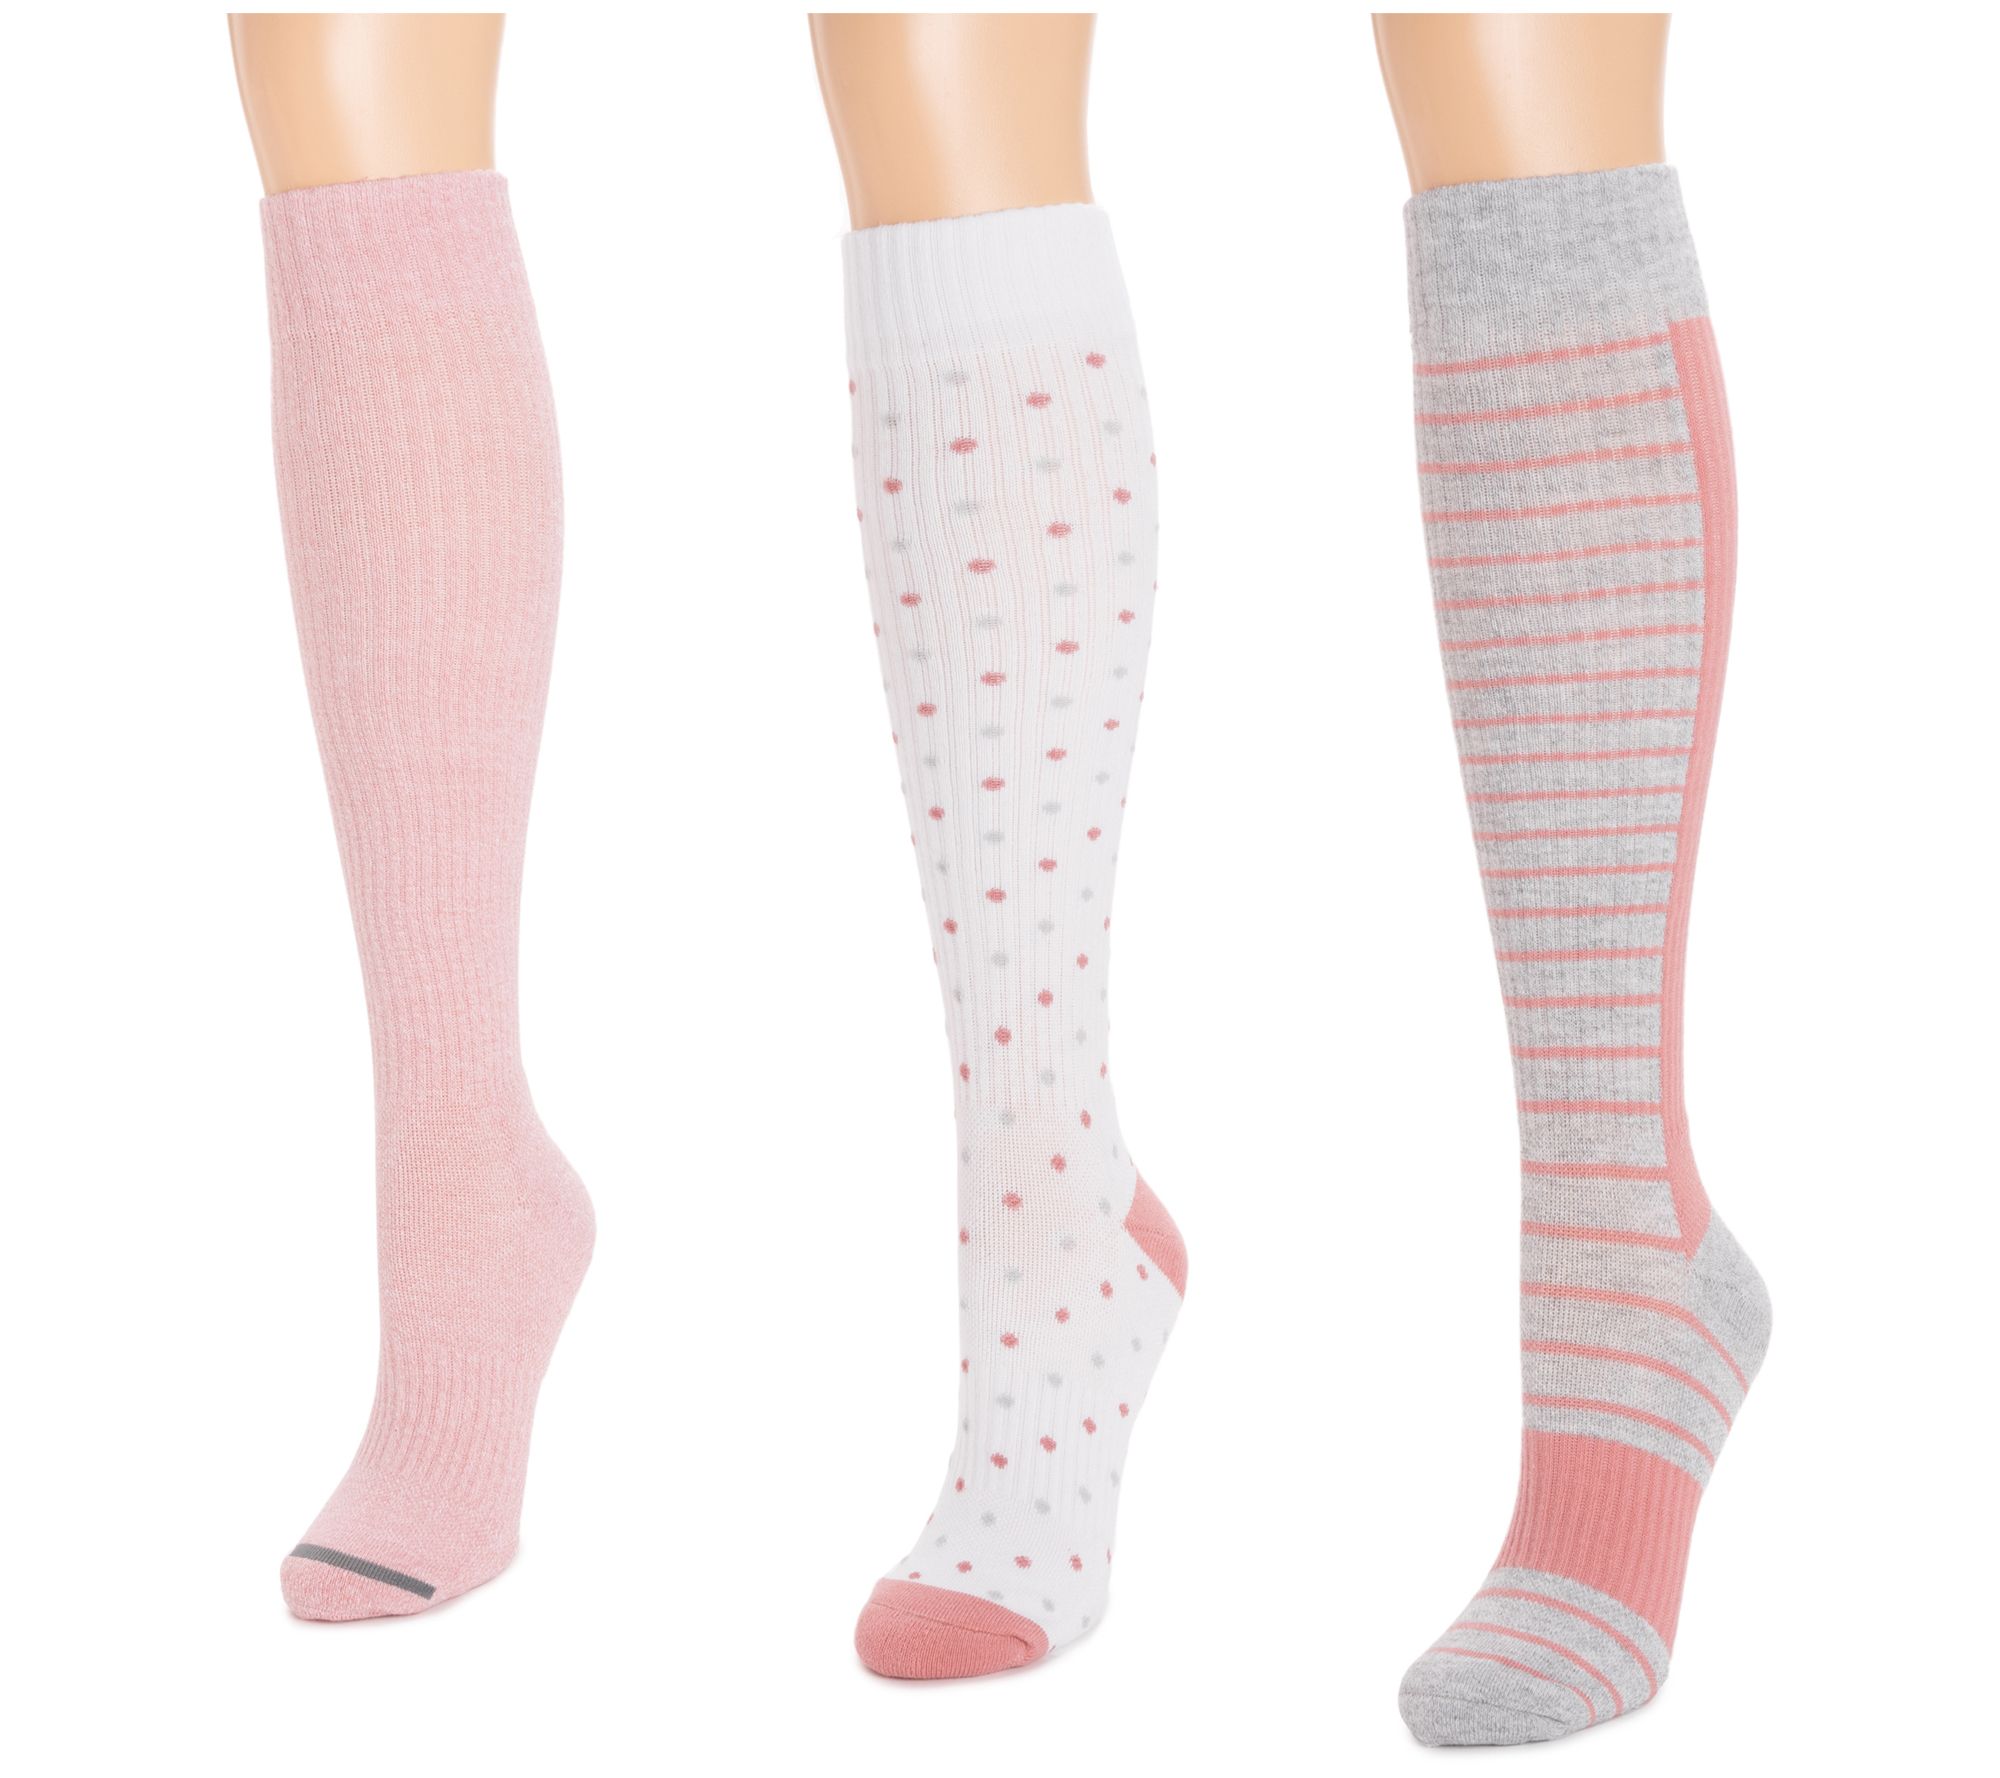 Dr. Scholl's Scented Premium Yarn Slipper Socks, 3-Pack